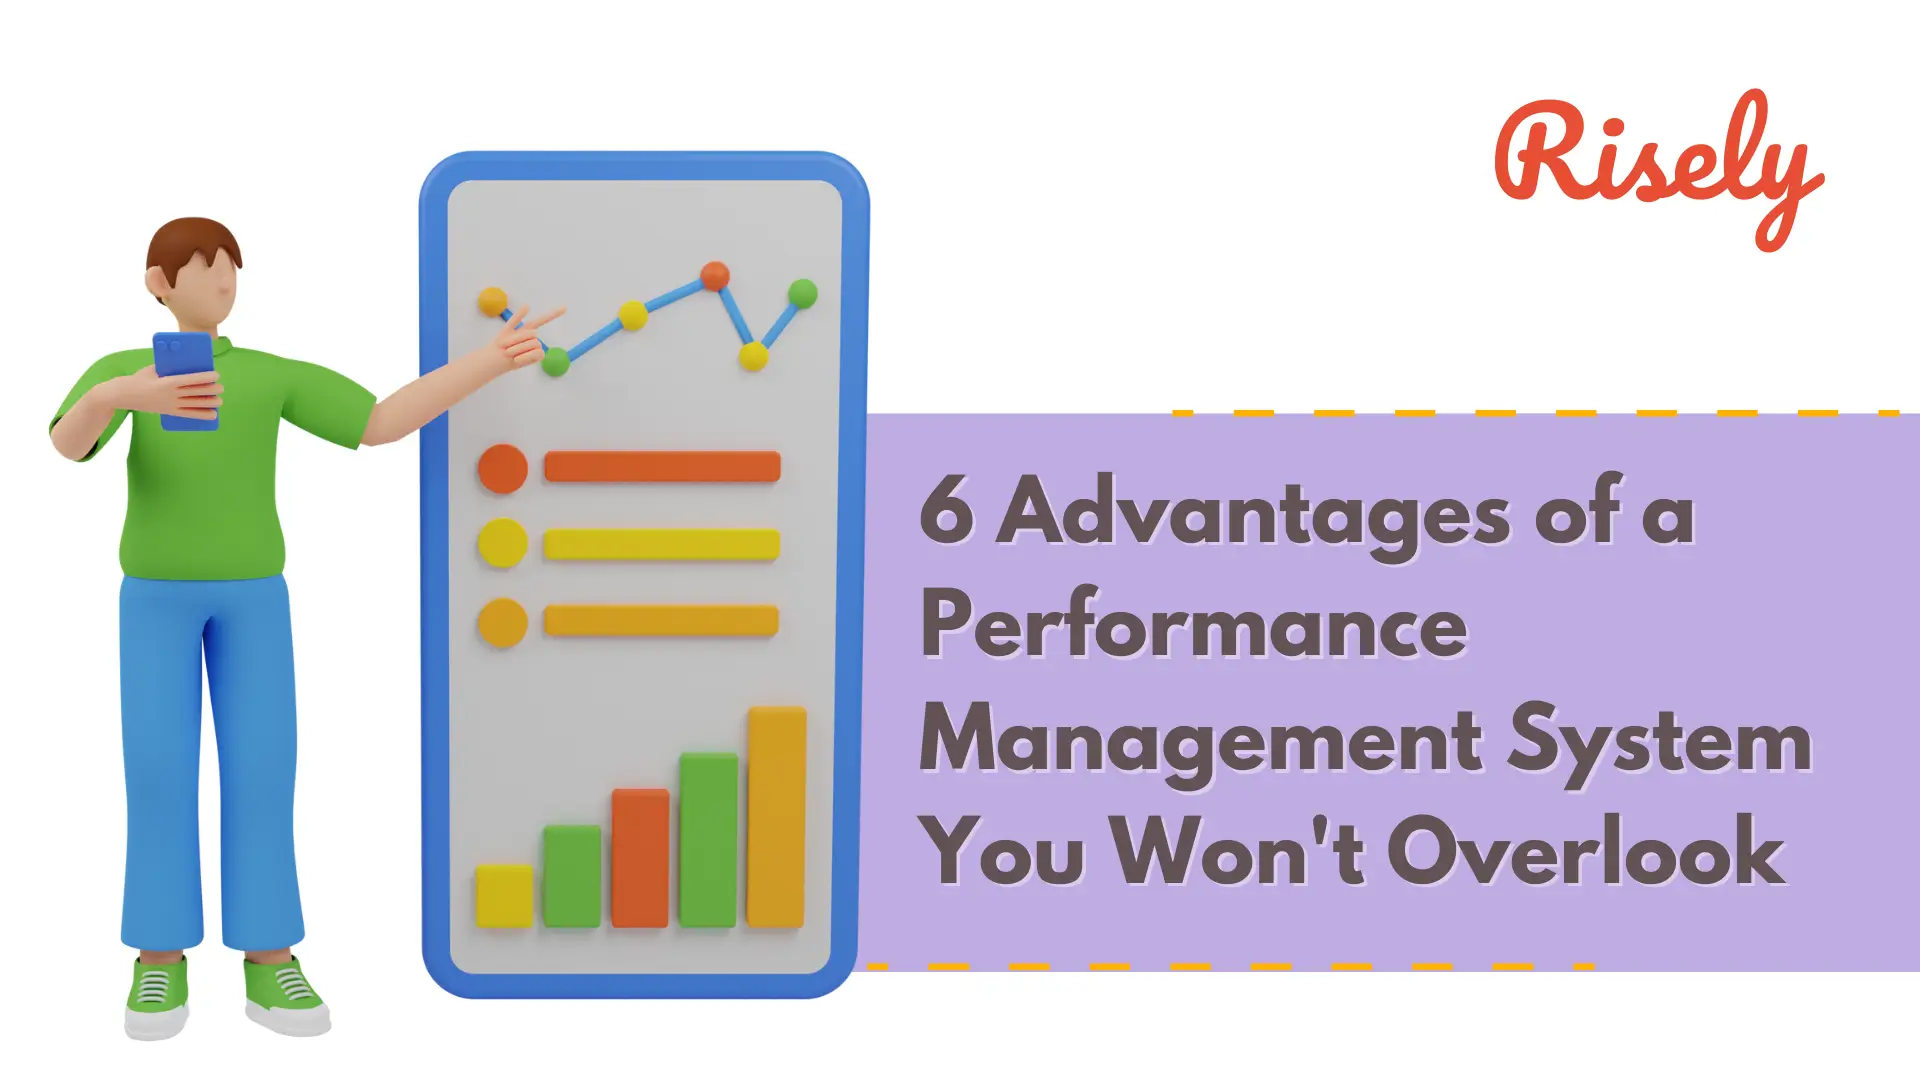 Advantages of a Performance Management System